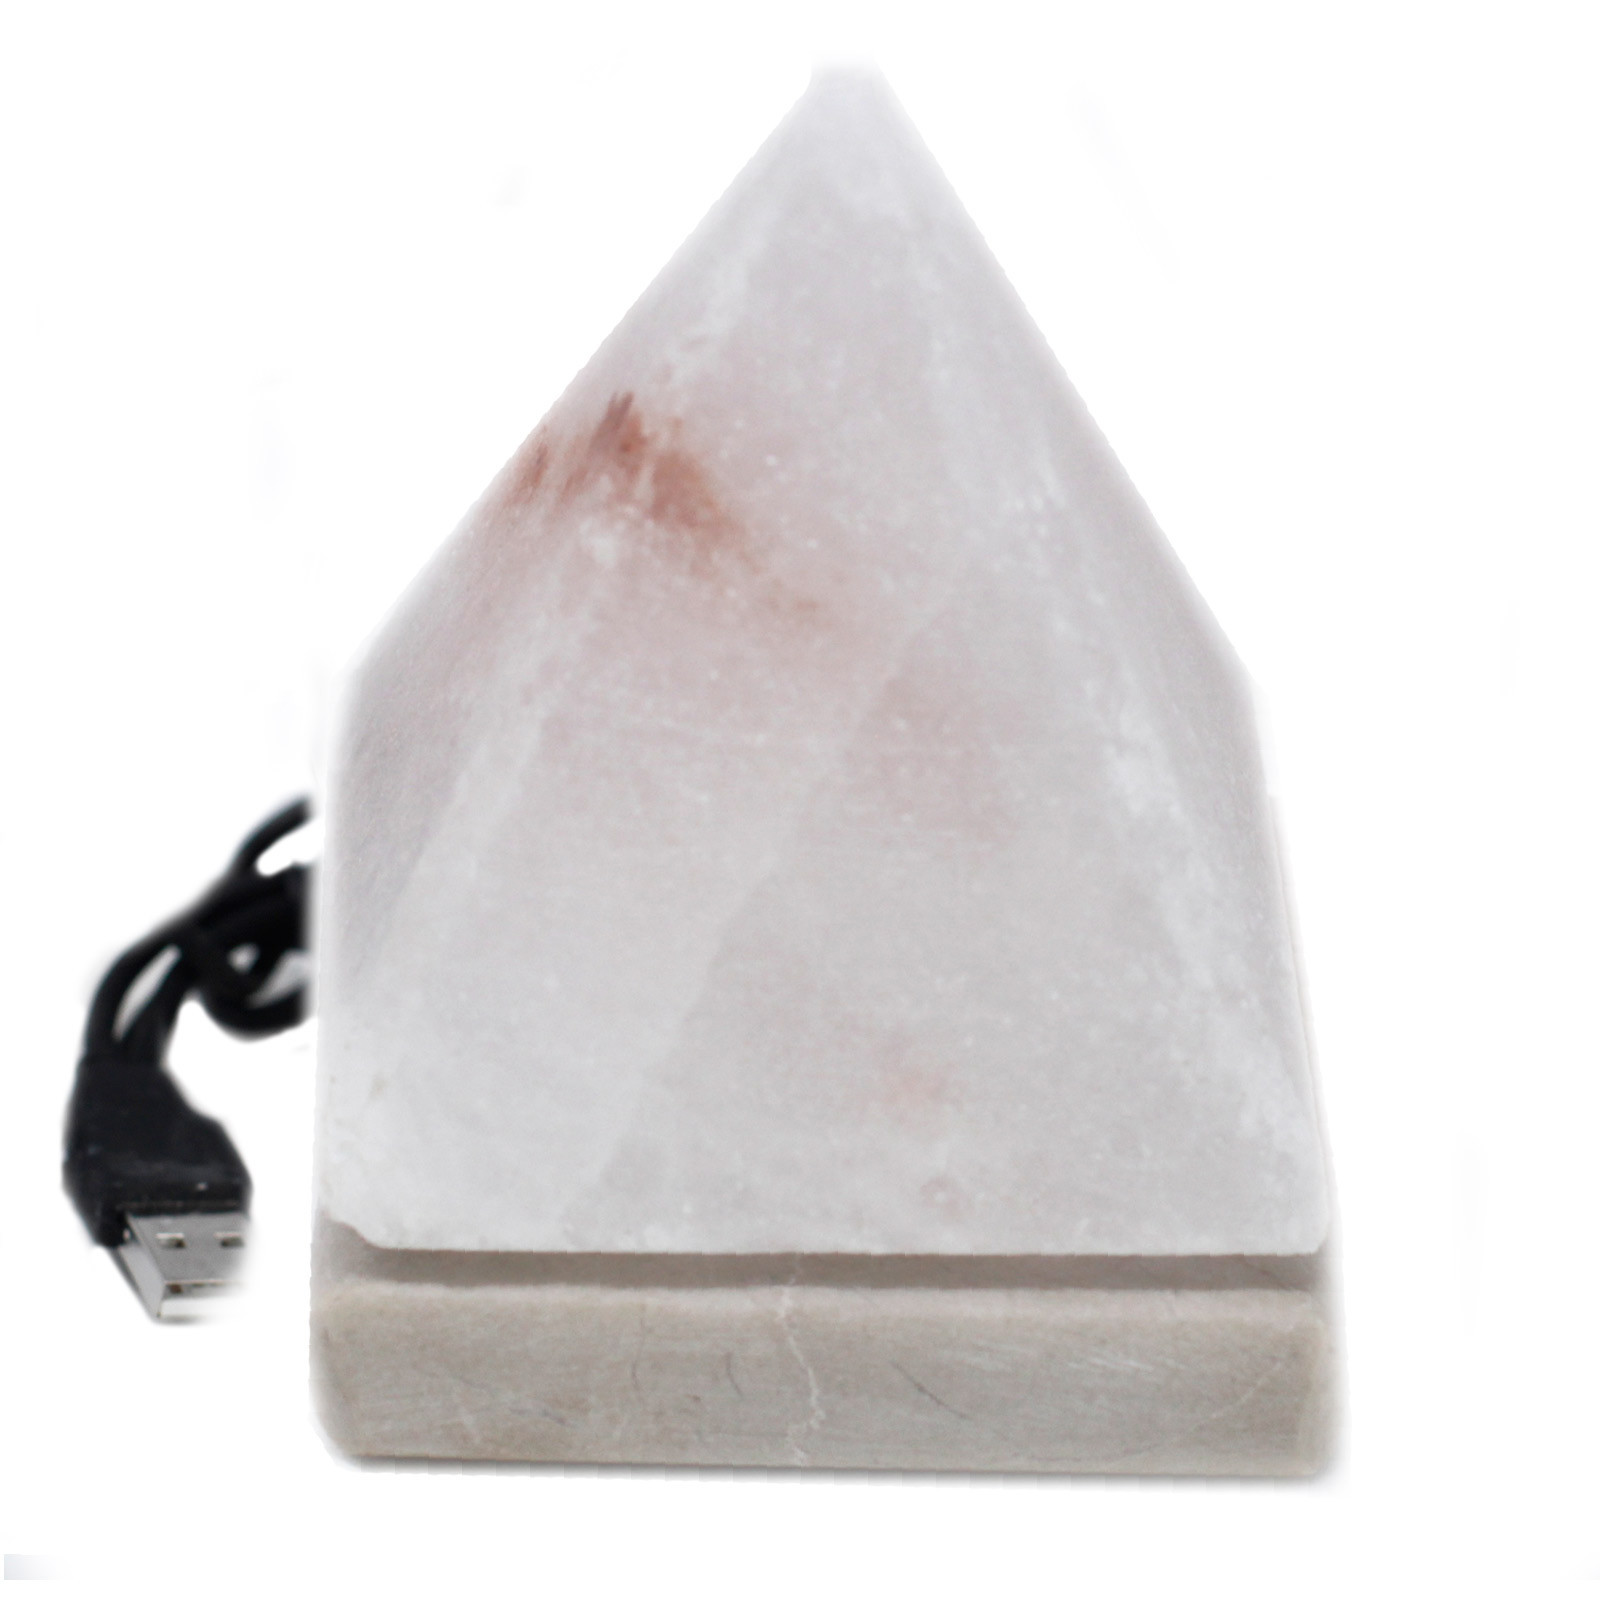 Pyramid WHITE Salt Lamp